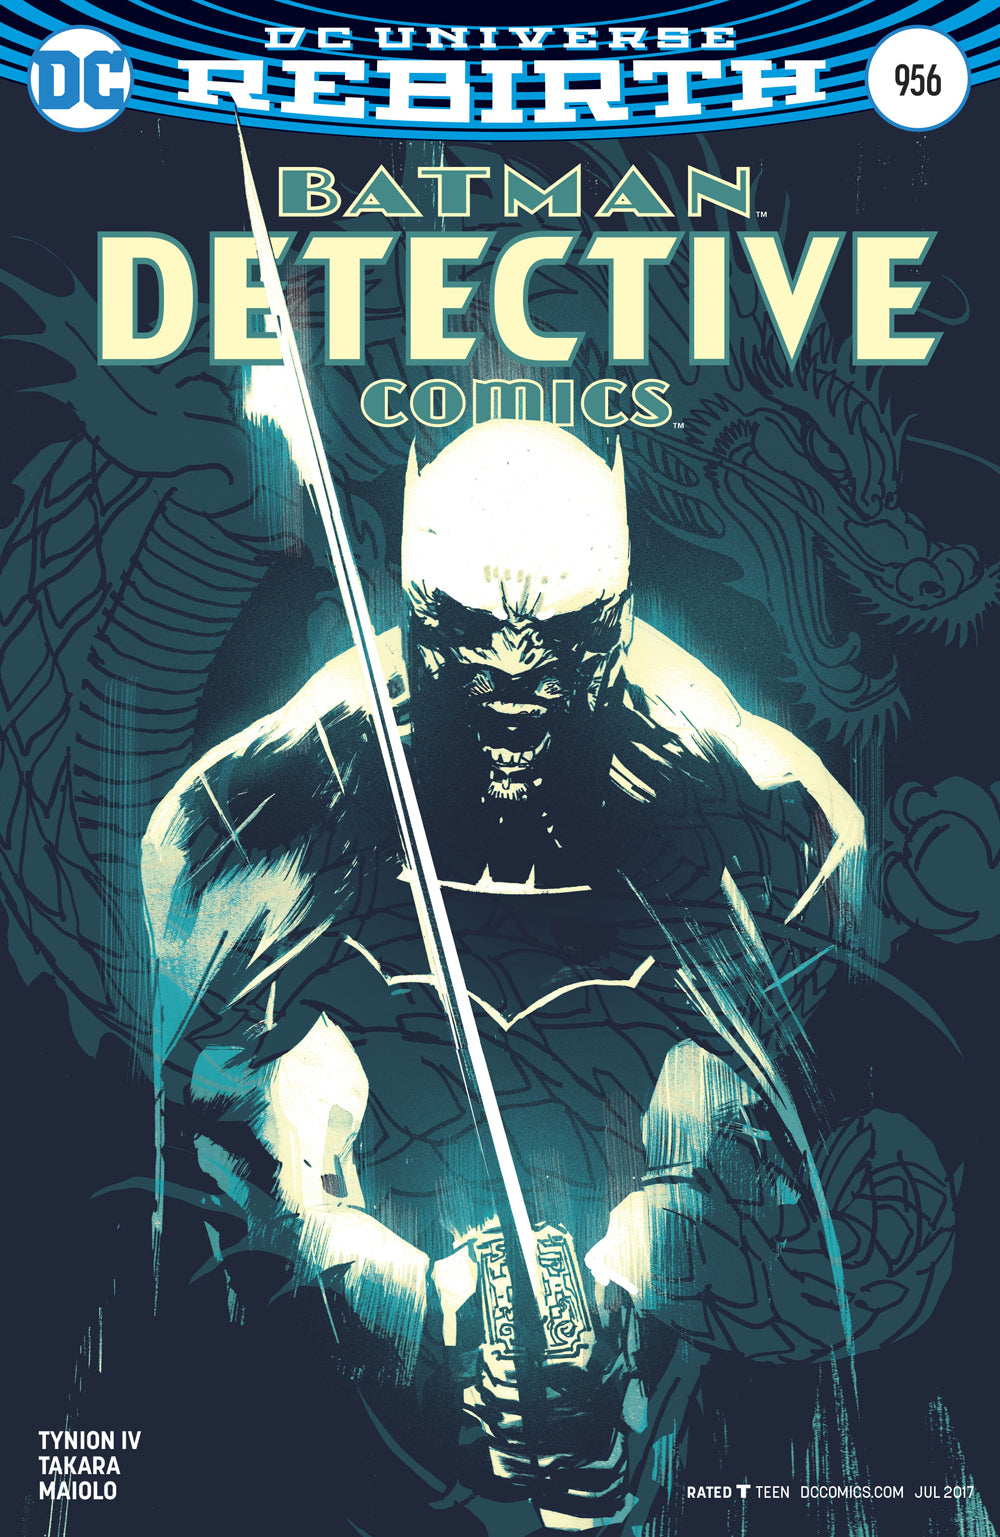 DETECTIVE COMICS #956 VAR ED | Game Master's Emporium (The New GME)